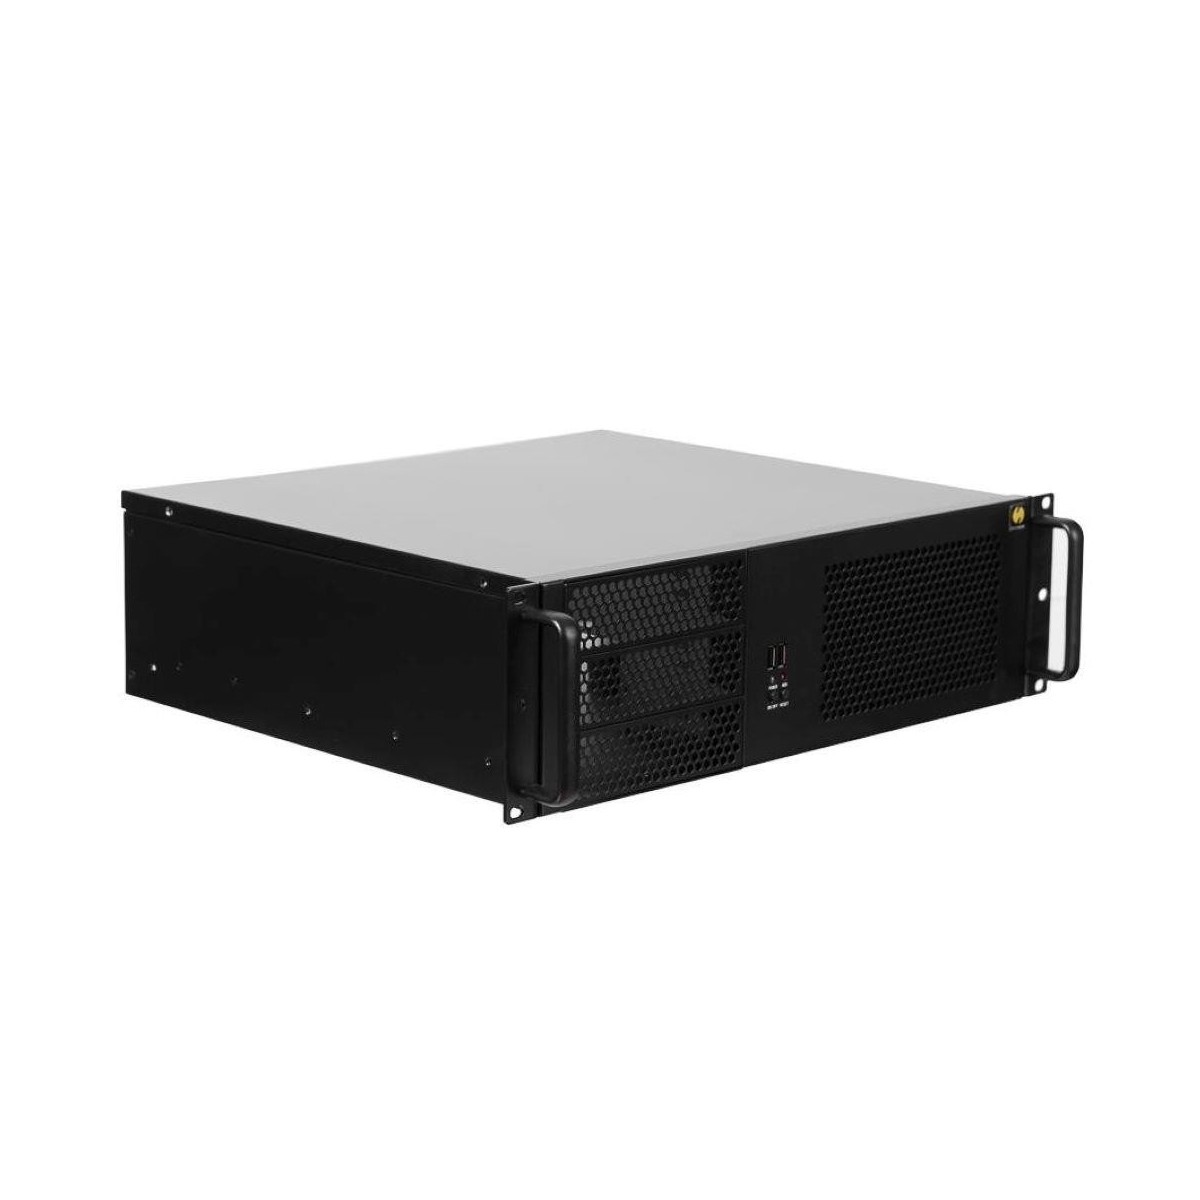 NETRACK Server Case Rackversion ATX Ingen Sort - Server chassis - ATX